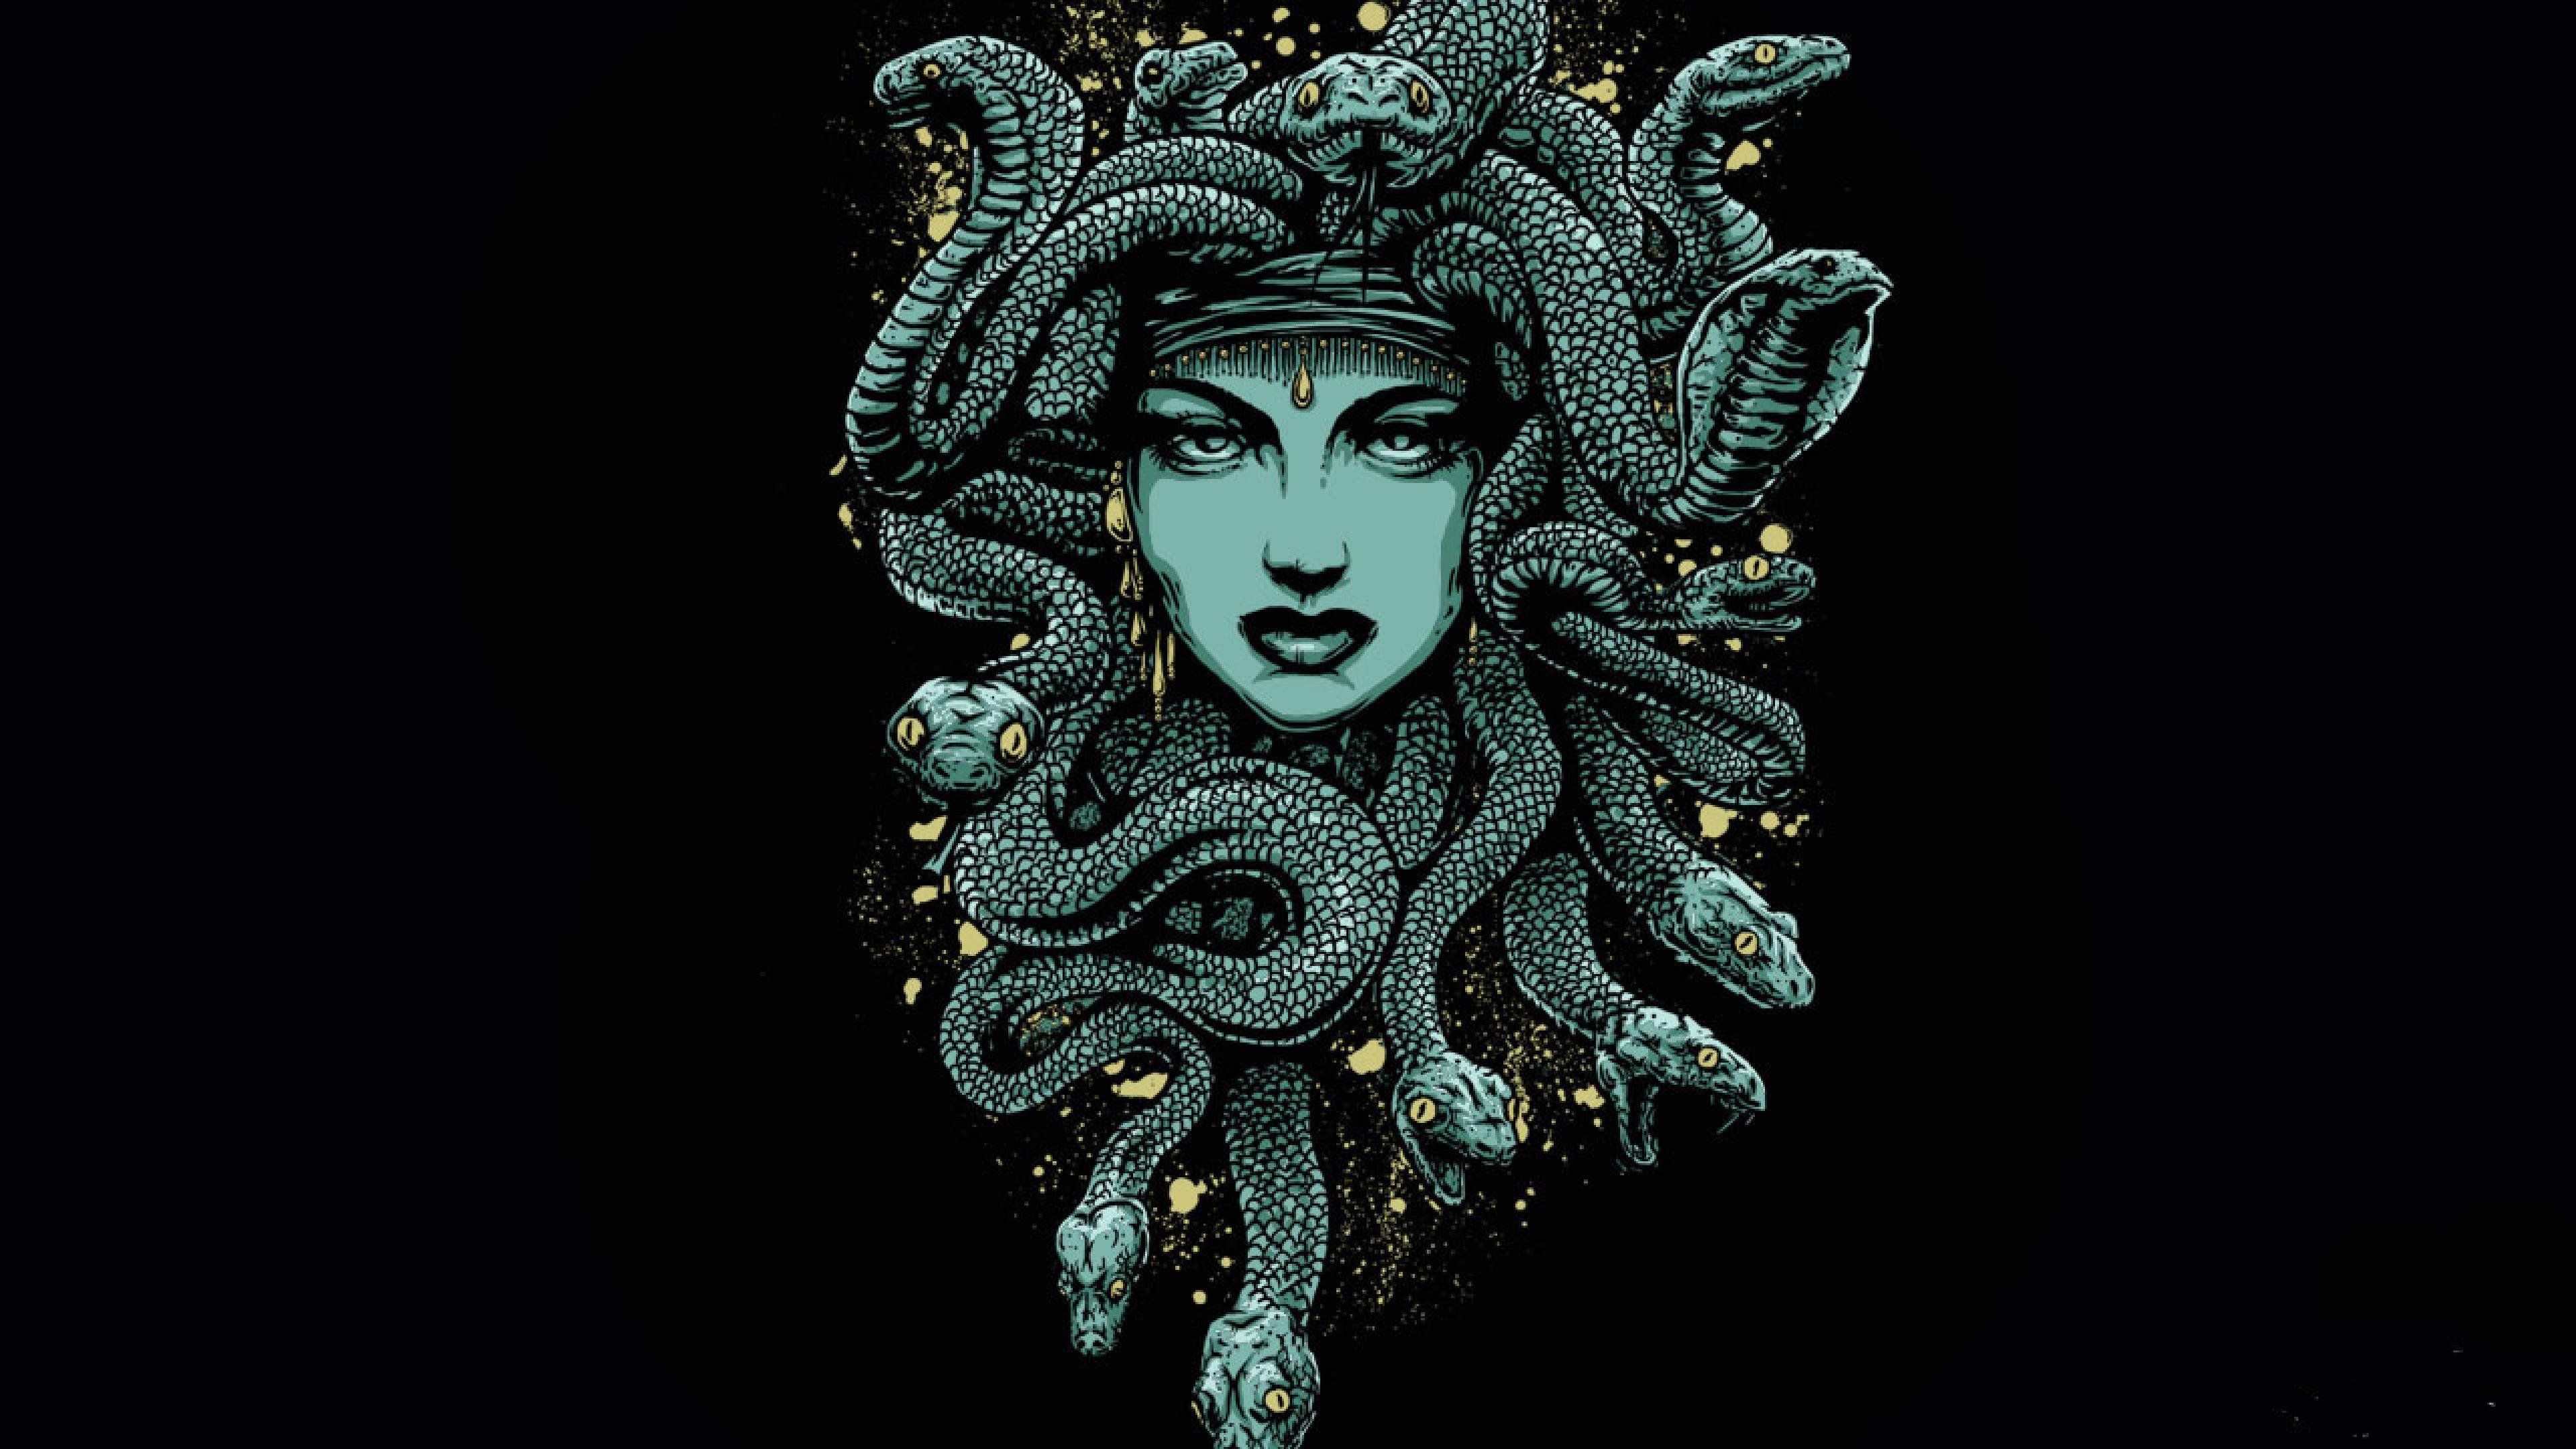 Medusa Monster Creature Artwork The best wallpaper backgrounds 3840x2160